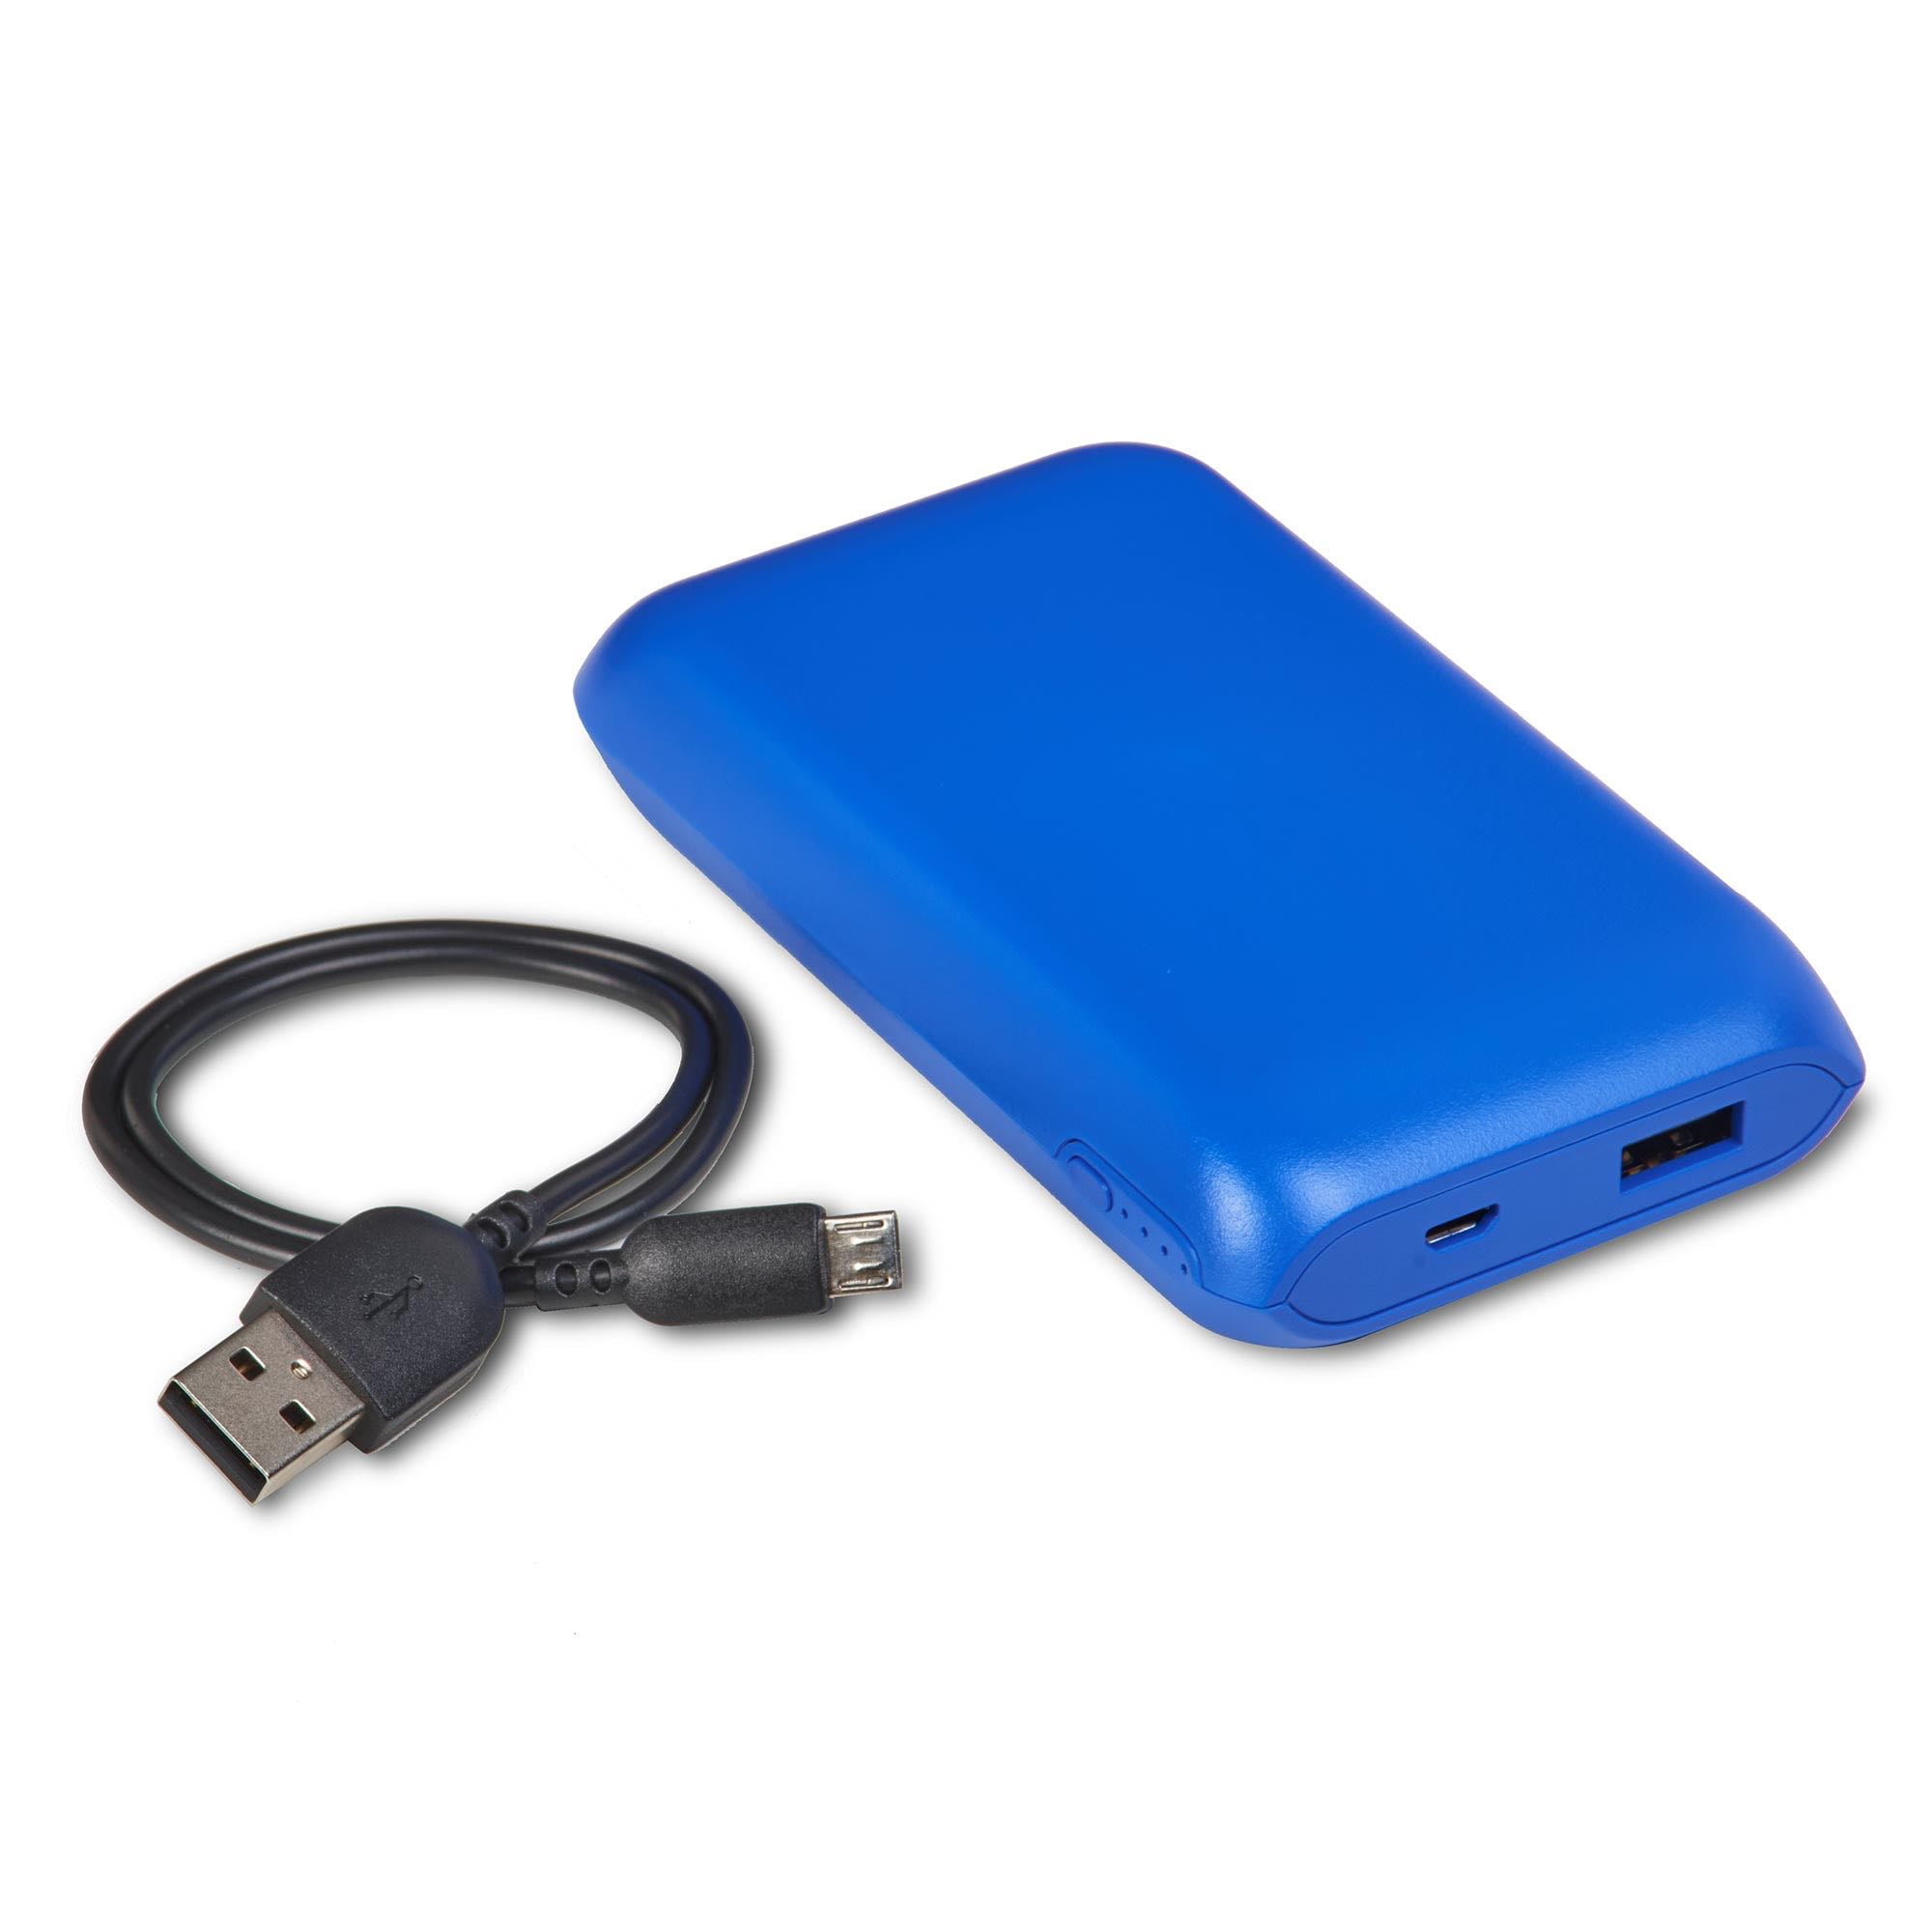 onn. Portable Battery, 8k mAh, Blue